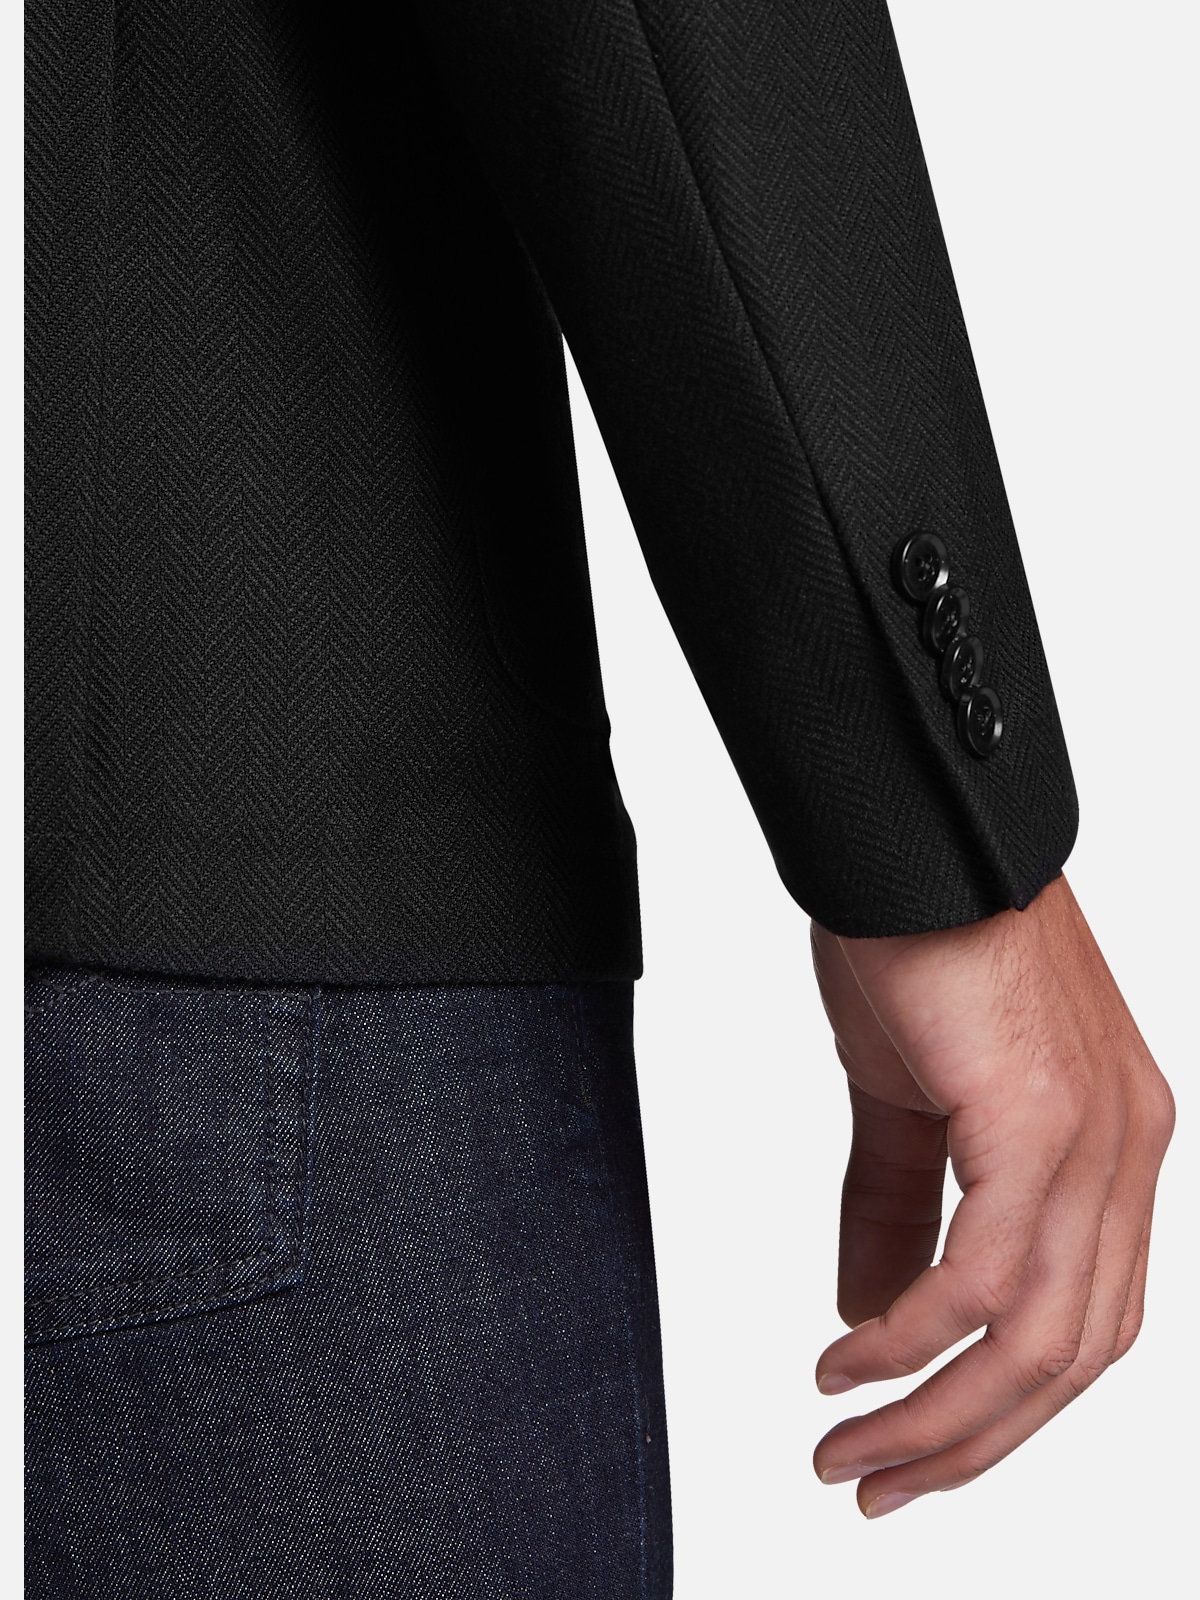 Calvin Klein Slim Fit Sport Coat | All Clothing| Men's Wearhouse